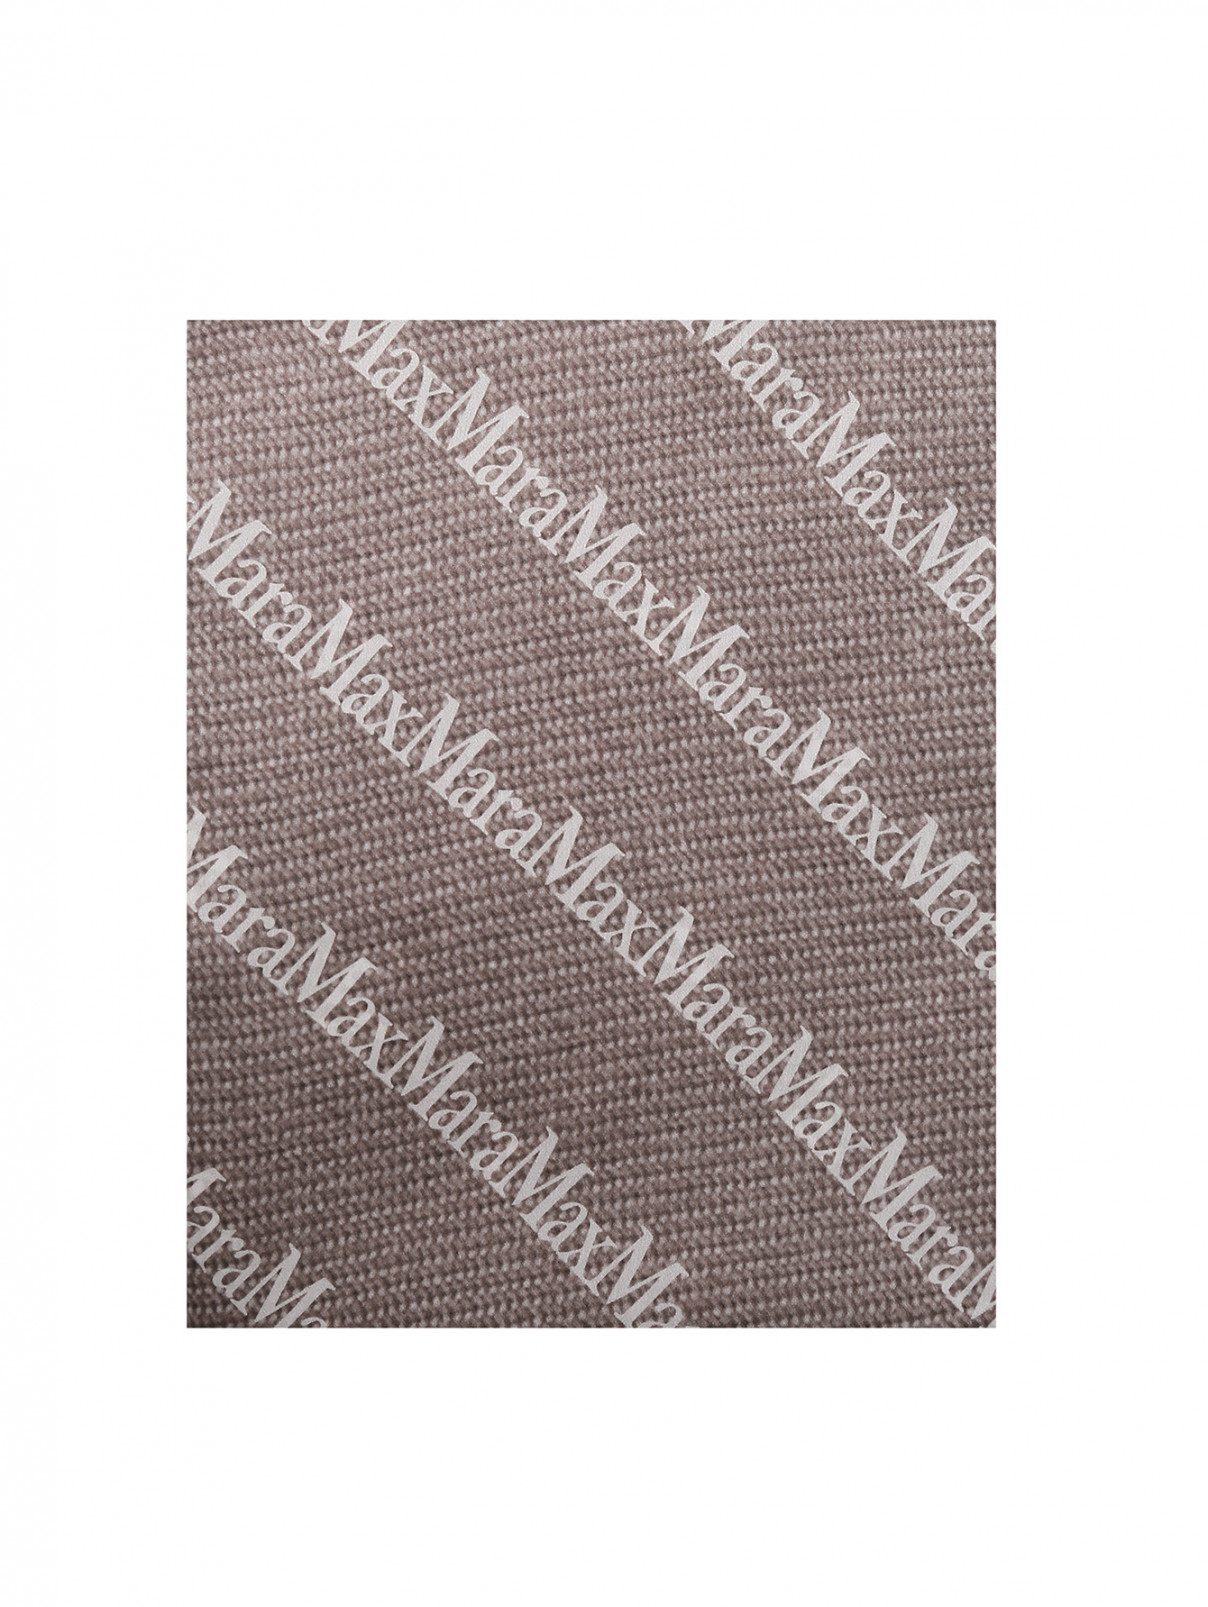 Шарф из шелка с узором Max Mara  –  Общий вид  – Цвет:  Серый